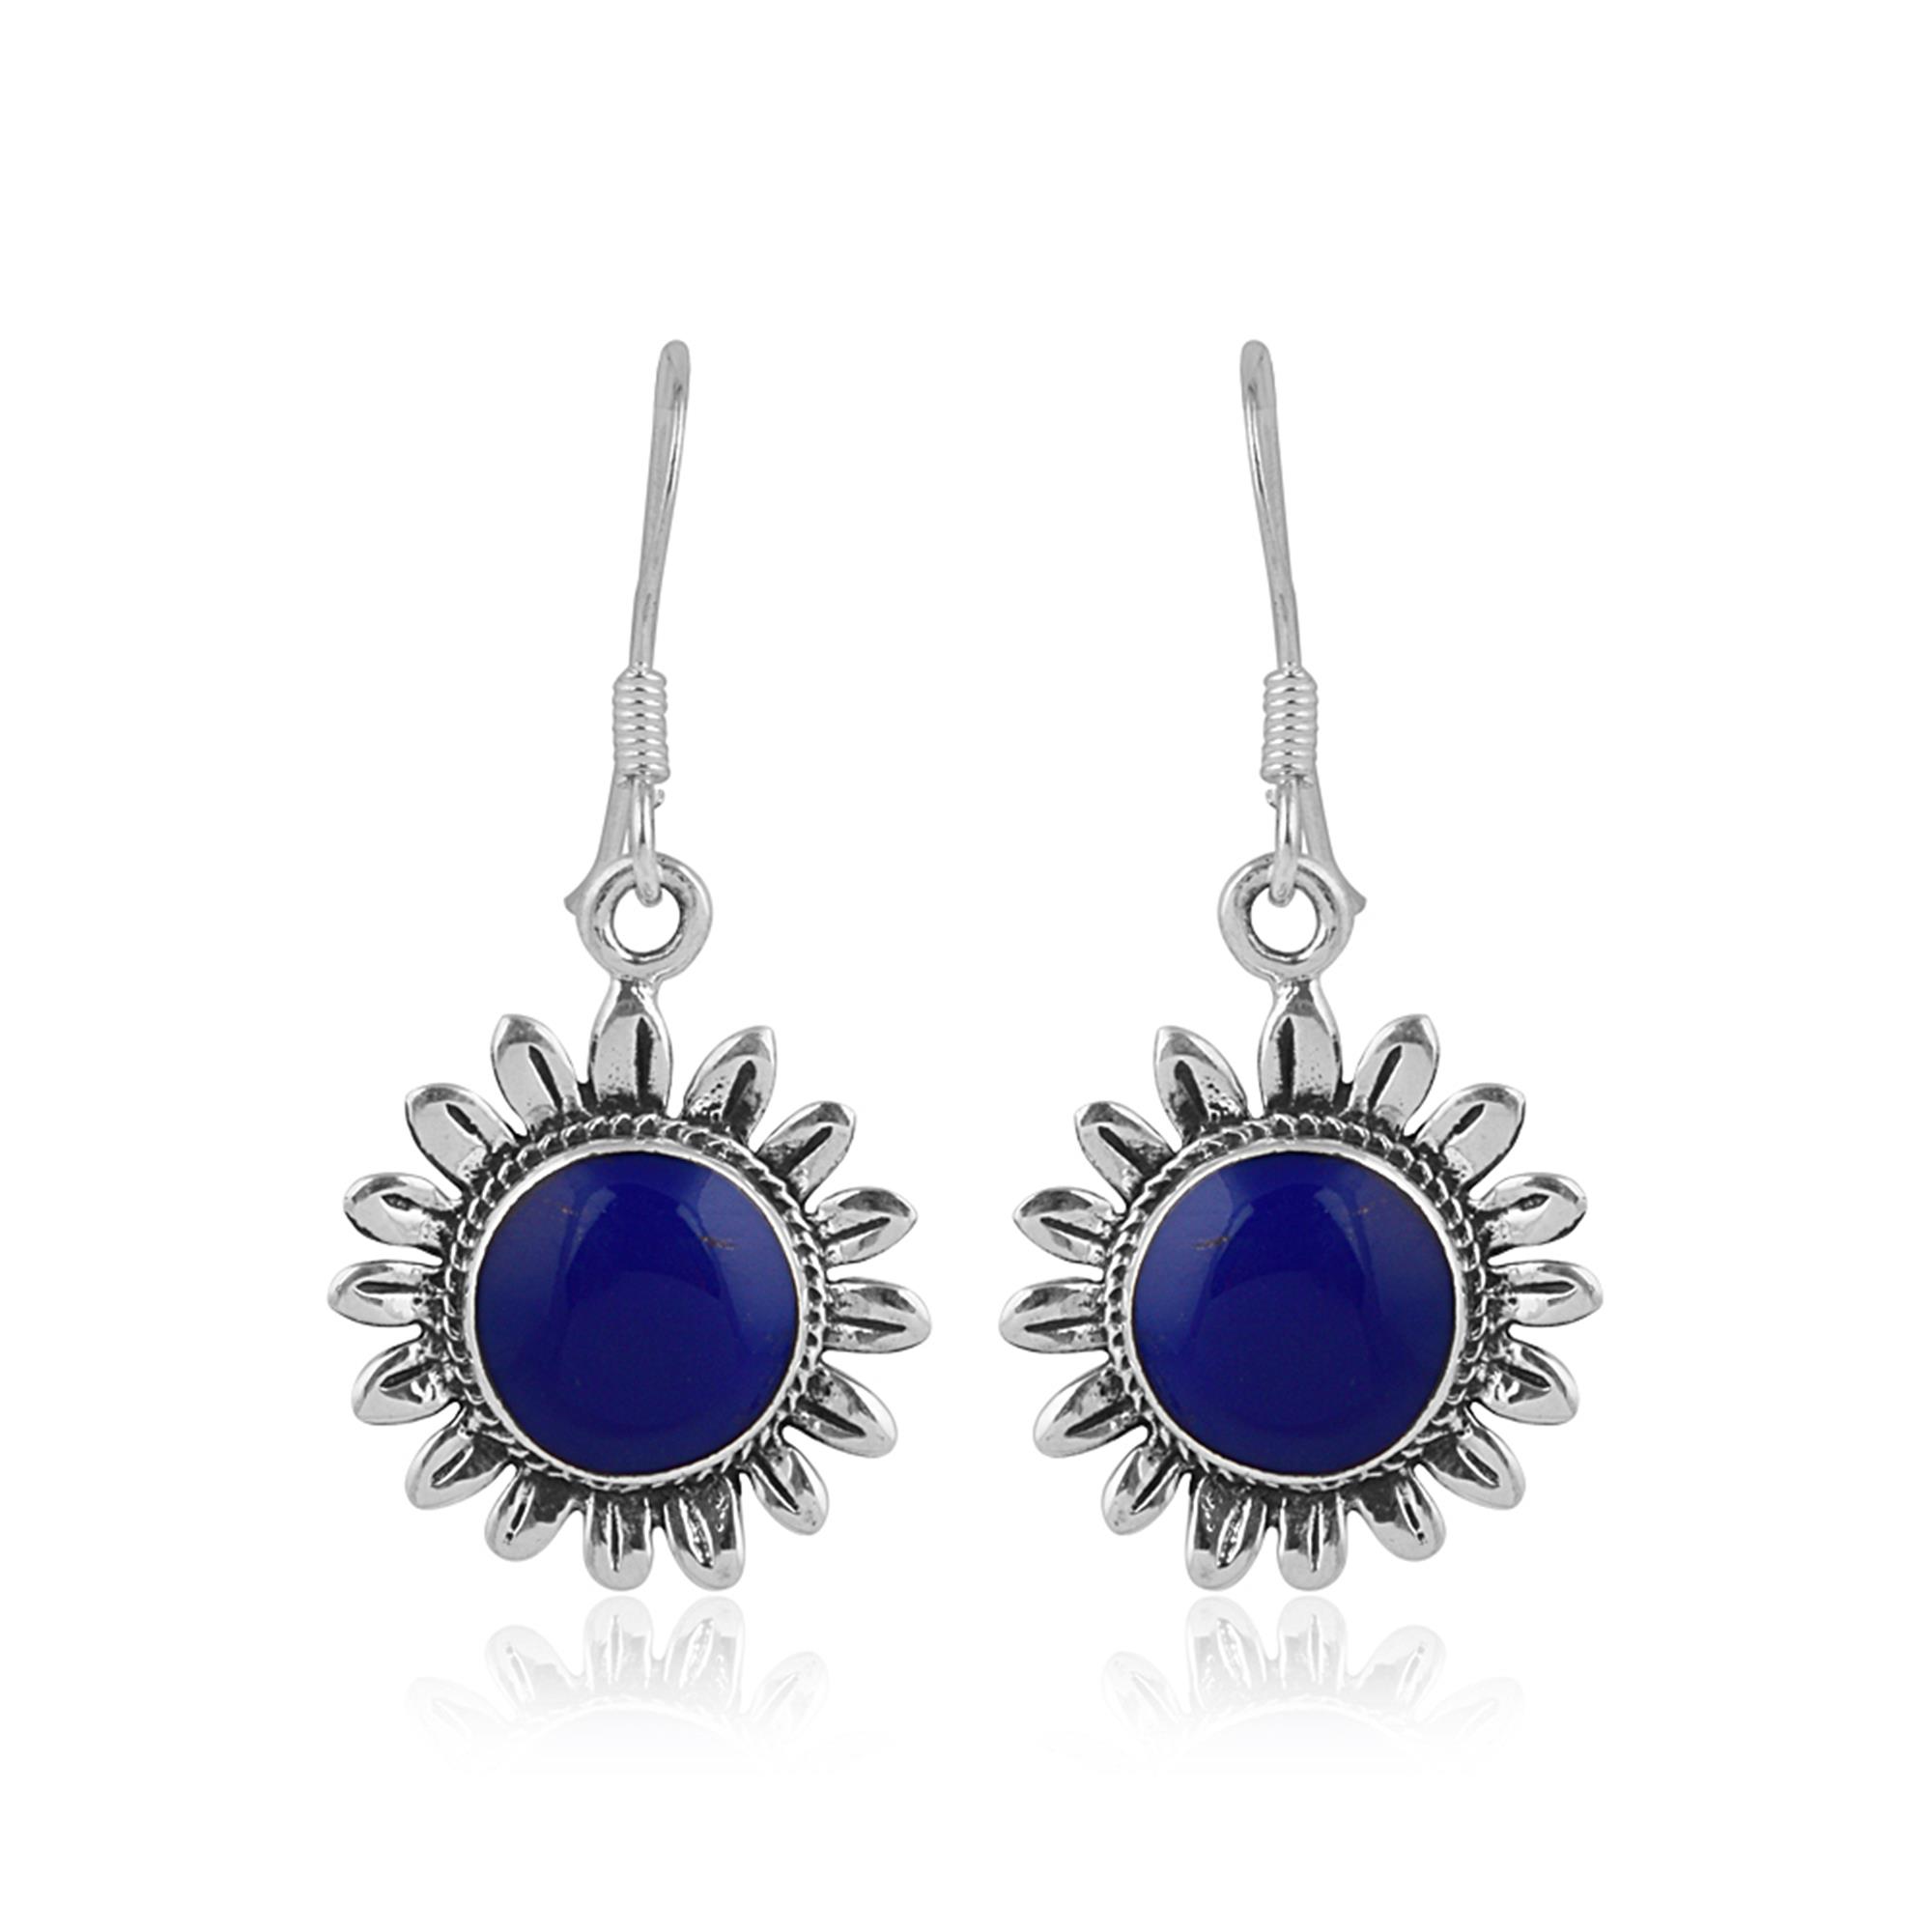 Round Lapis Lazuli Gemstone 925 Sterling Silver Floral Design Dangle Earrings 